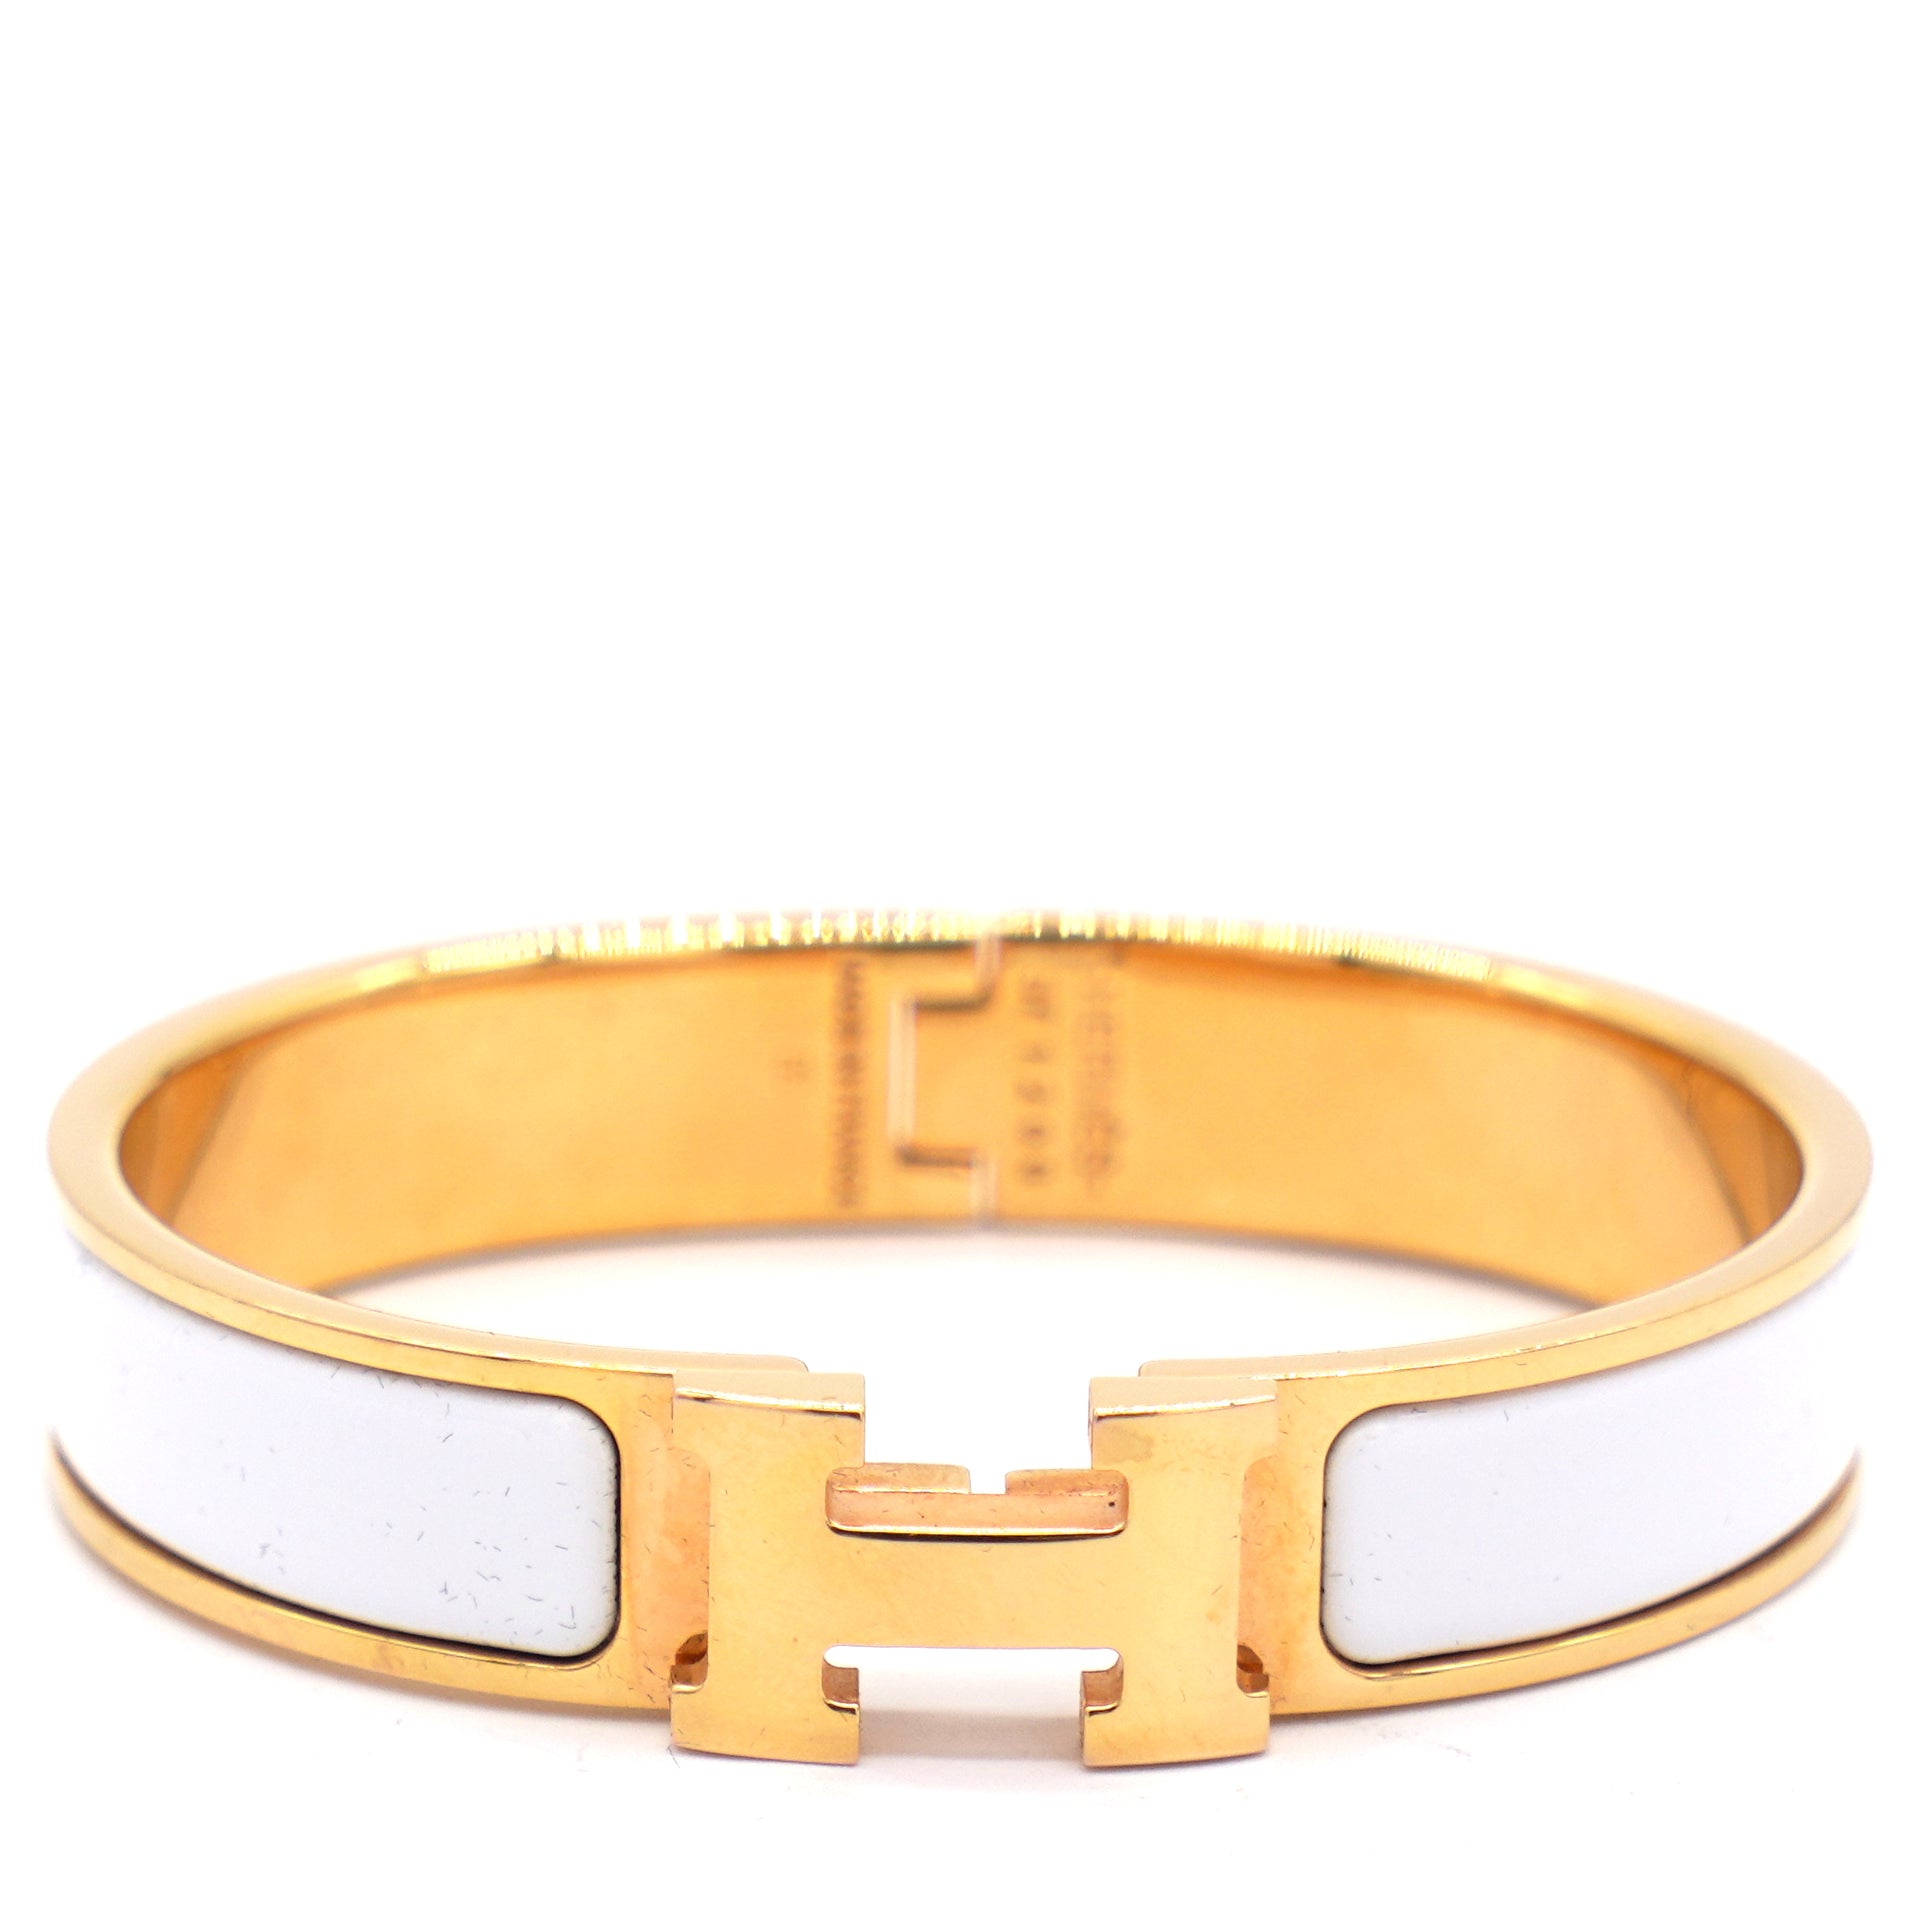 Clic H bracelet | Silver jewelry handmade, Hermes bracelet, Silver bracelets